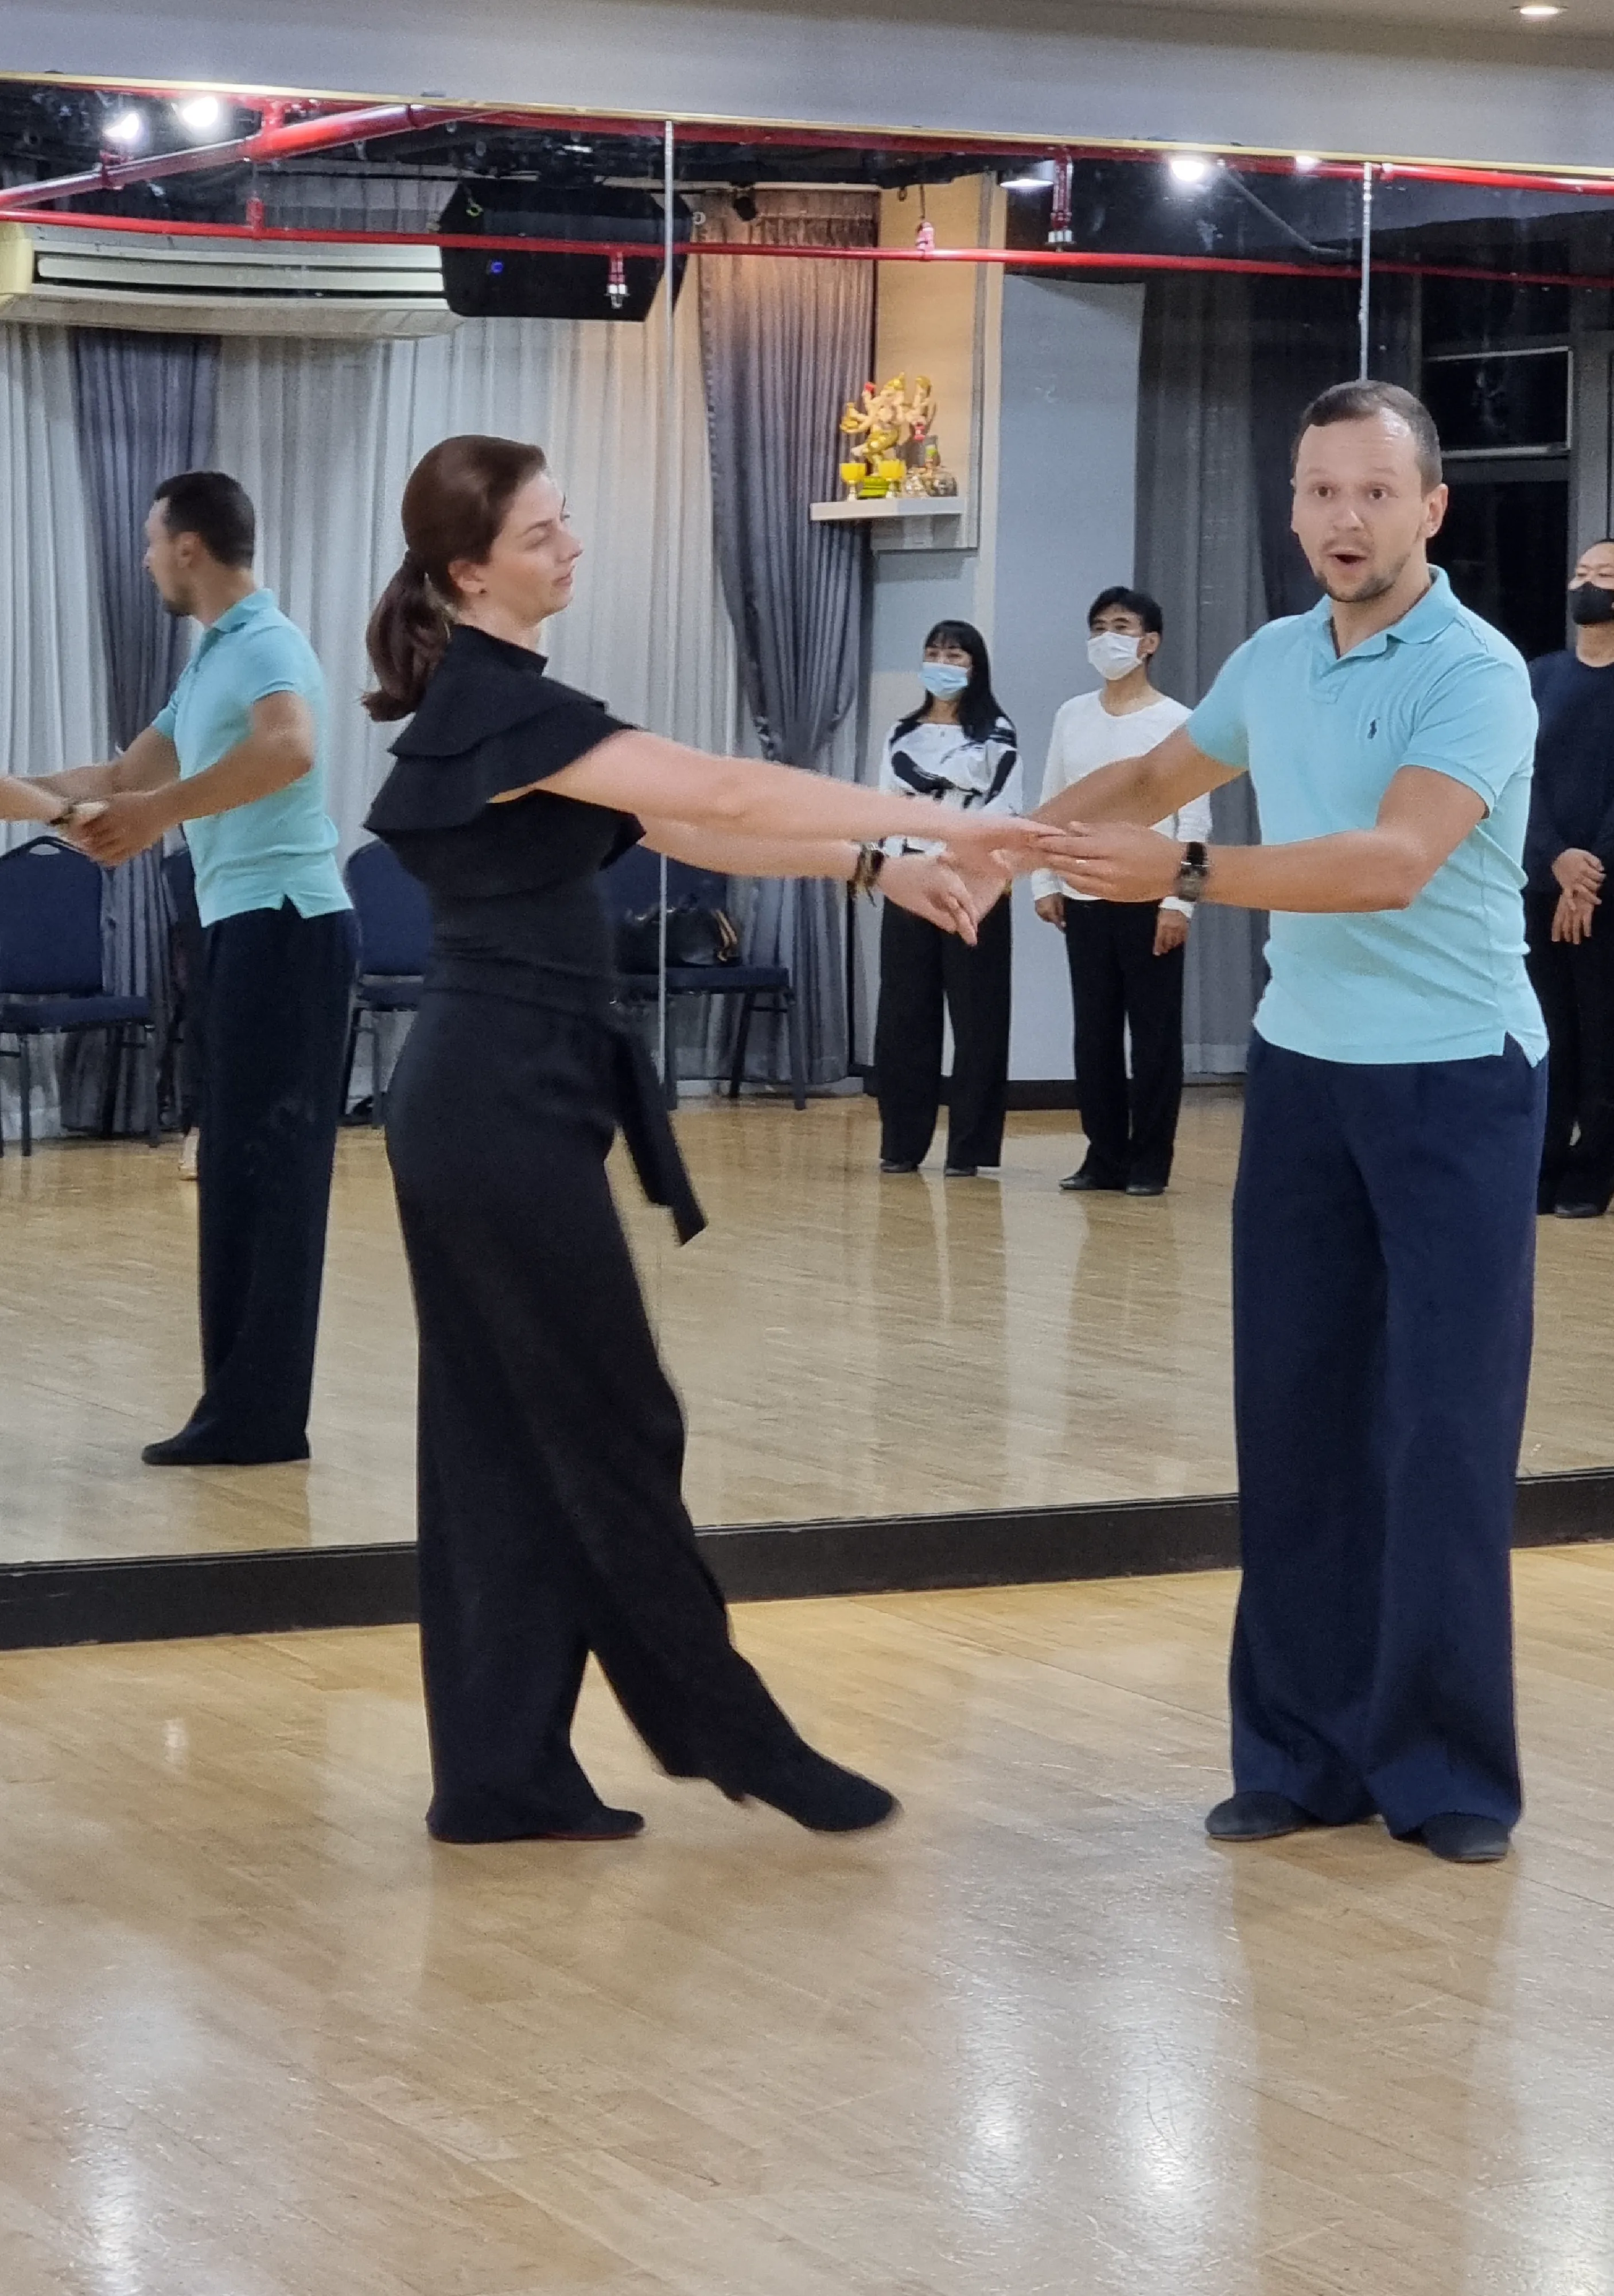 Moda dance studio โรงเรียนสอนเต้น สอนเต้นลีลาศ สอนเต้นรำ ไม่มีพื้นฐานก็เรียนได้